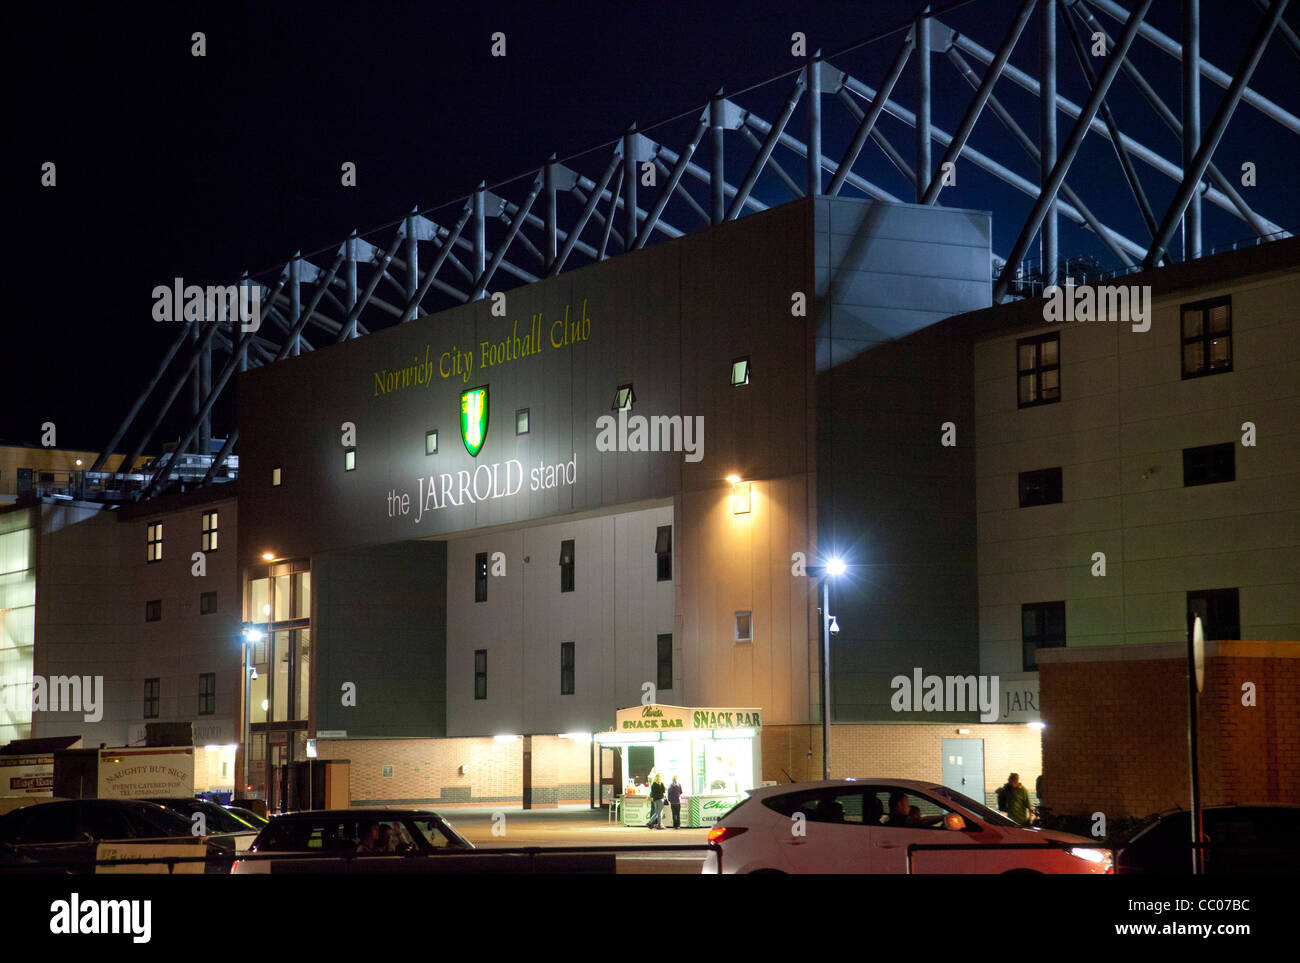 Norwich City Football Club stadium at night Stock Photo